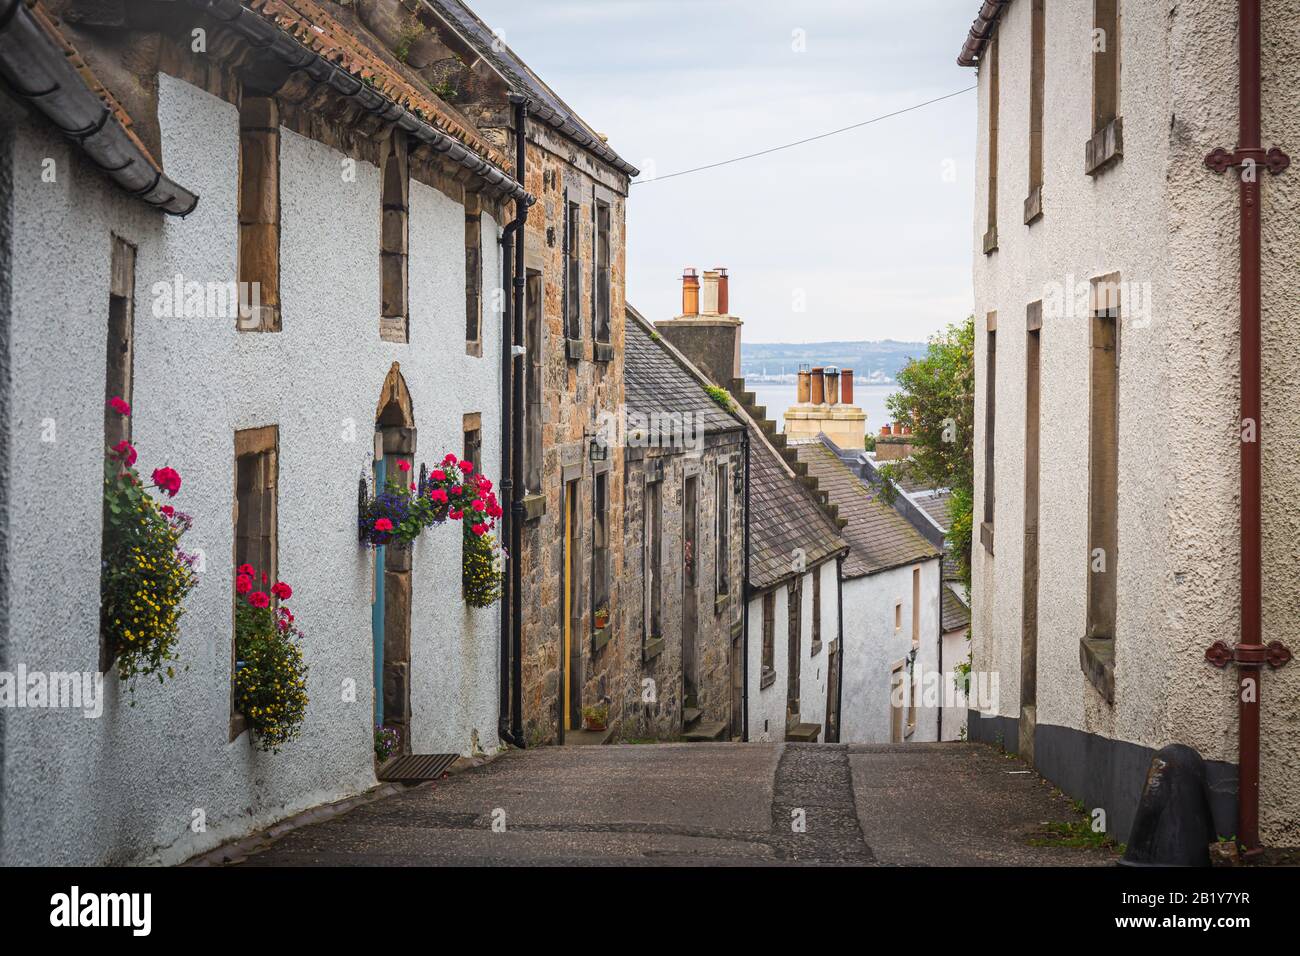 National Trust für Schottland Immobilie in Culross Fife Schottland wiederhergestellt Stockfoto